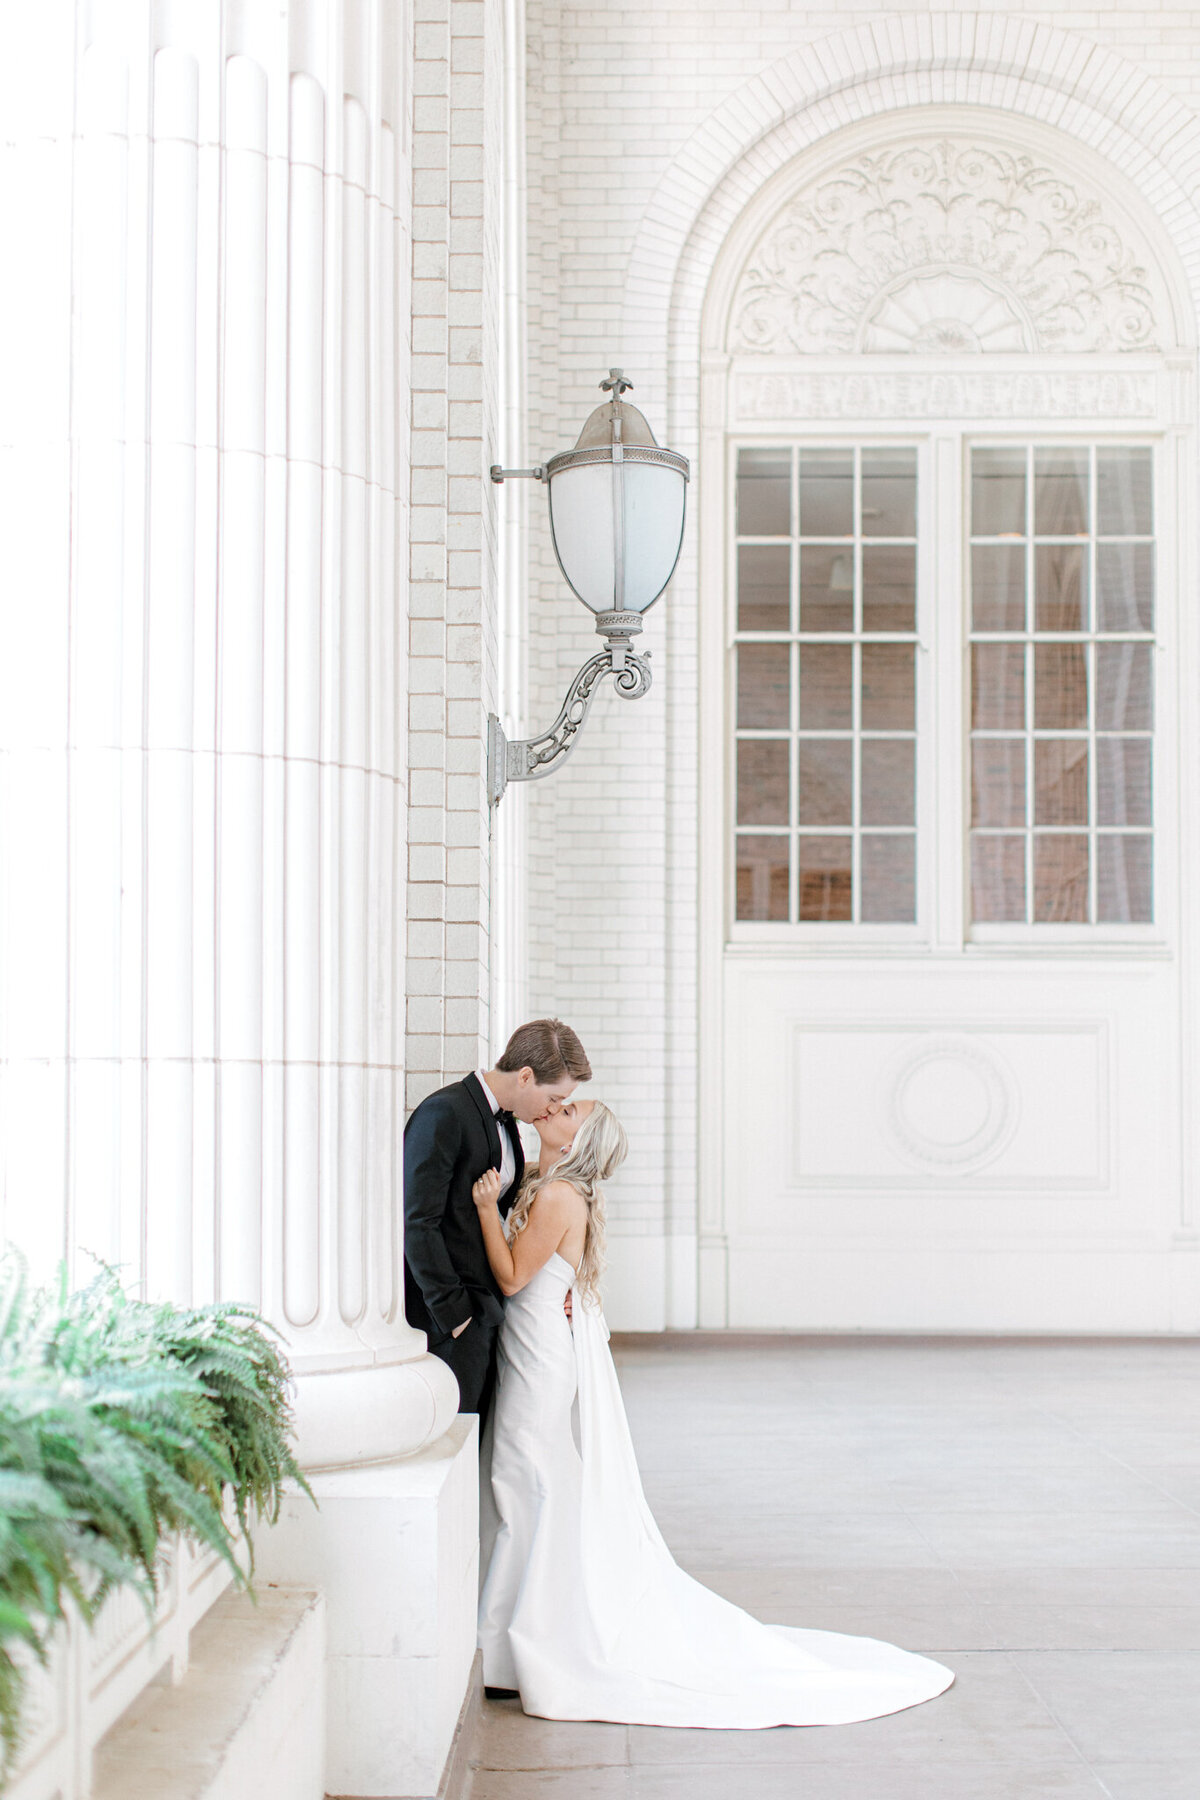 Madison & Michael's Wedding at Union Station | Dallas Wedding Photographer | Sami Kathryn Photography-5